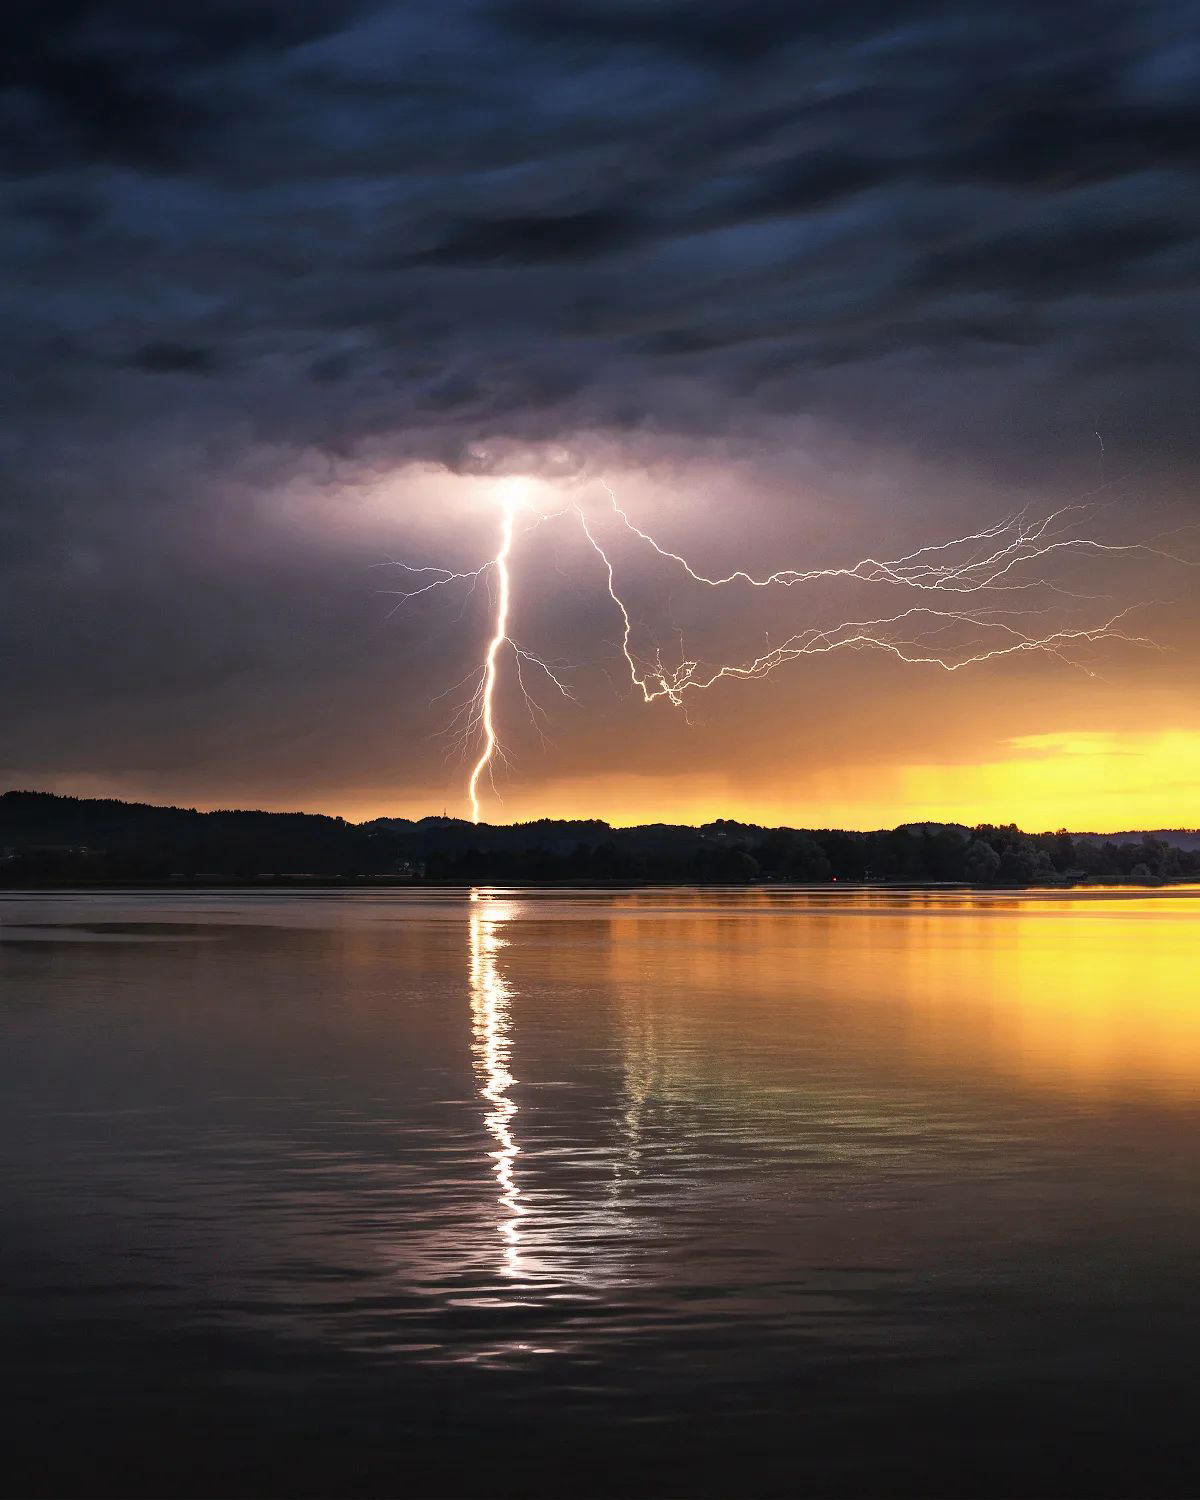 image  1 Kilian Schönberger - Lightning StrikeMaybe my favorite photo of Lake Chiemsee yet